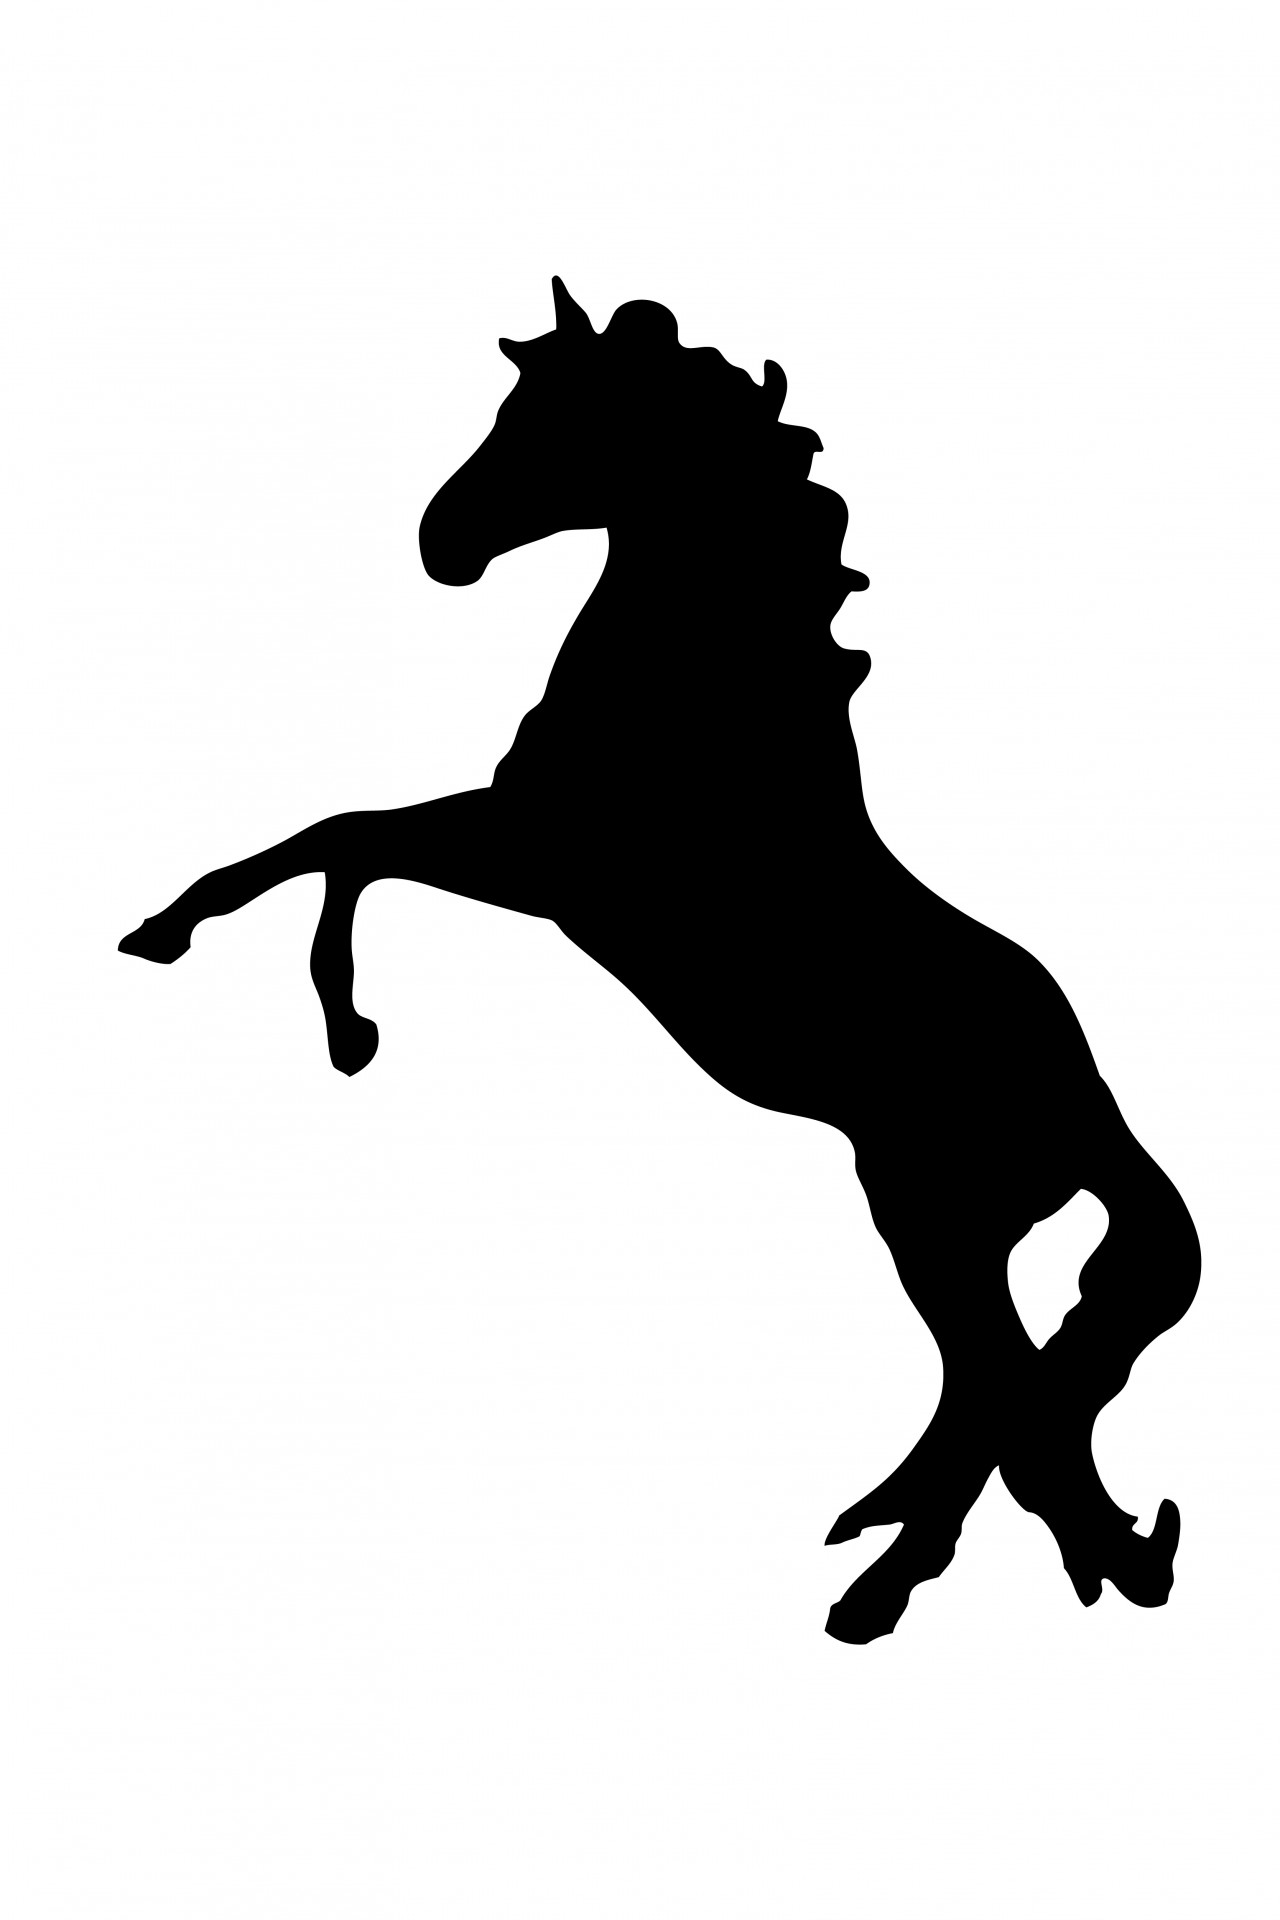 Rearing Black Horse Silhouette Free Stock Photo Hd   Public Domain    